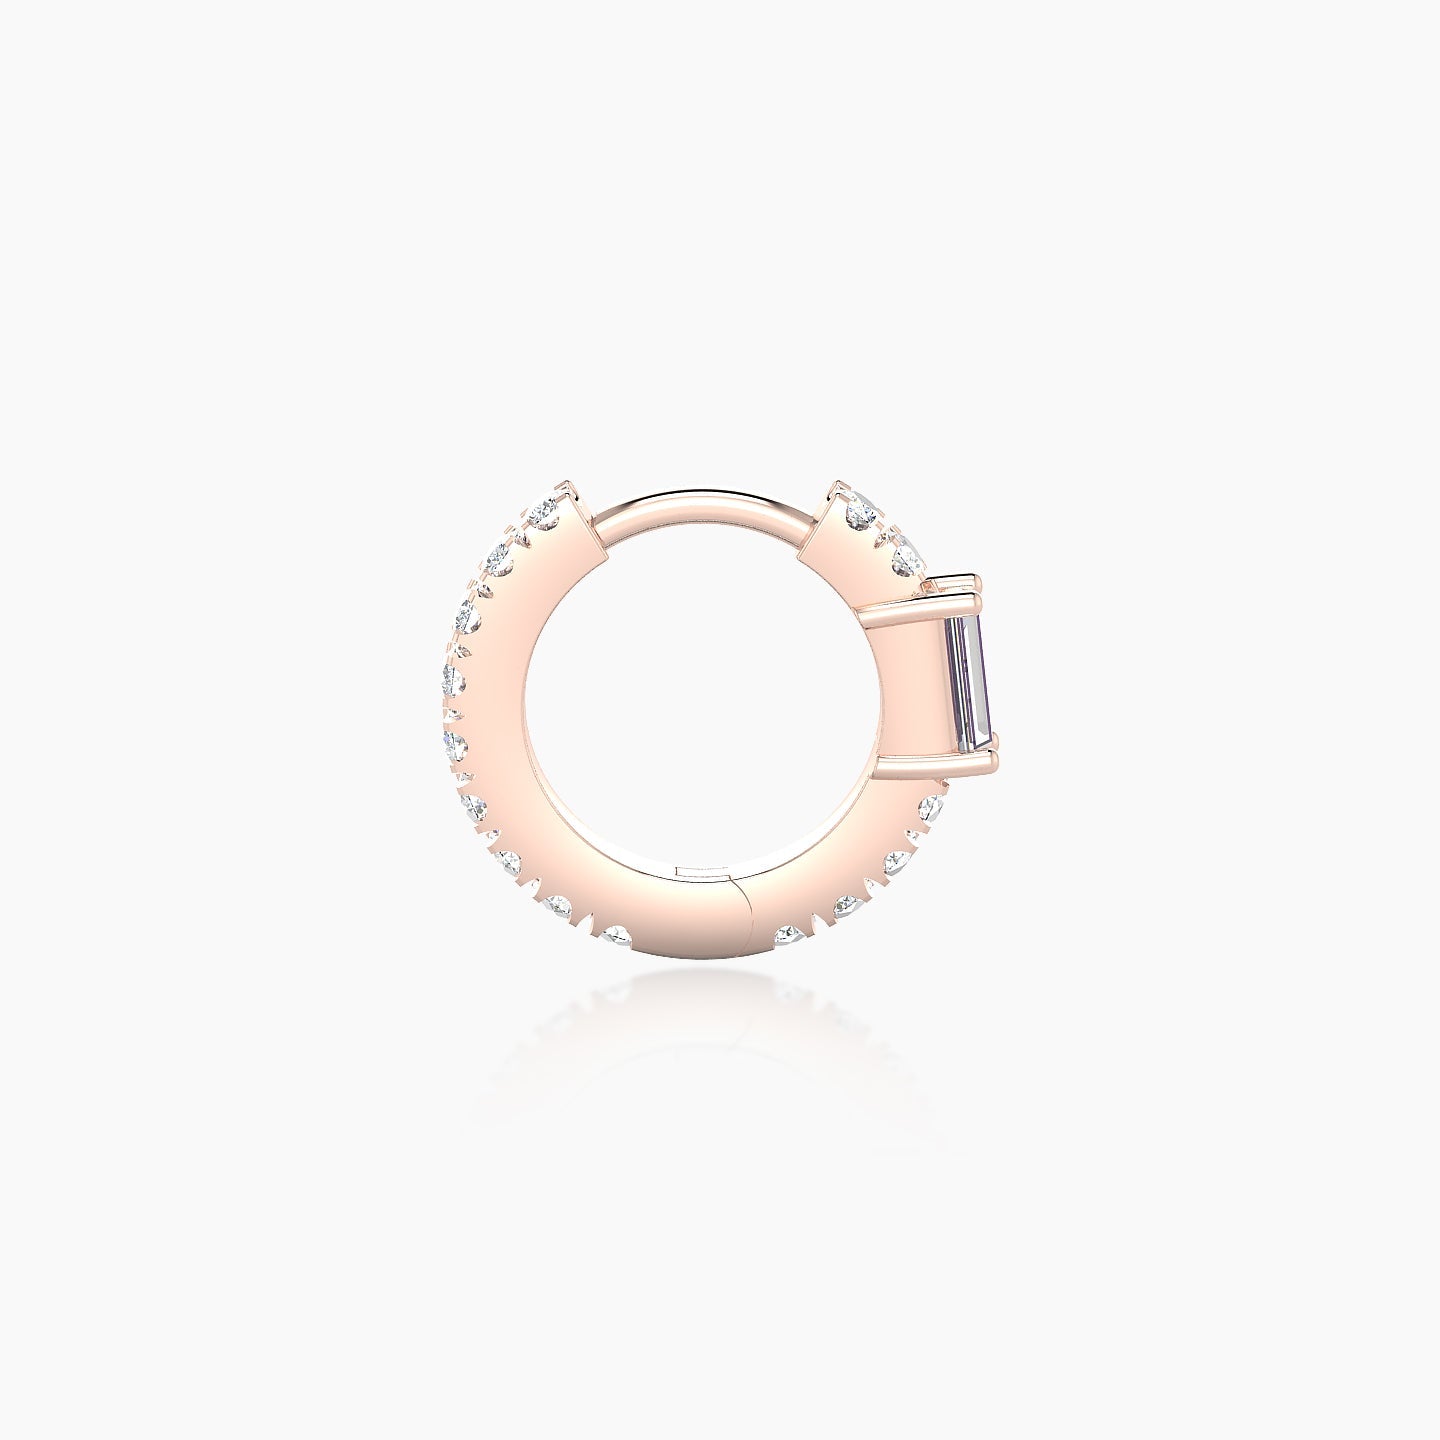 Inanna | 18k Rose Gold 6.5 mm Baguette Diamond Nose Ring Piercing